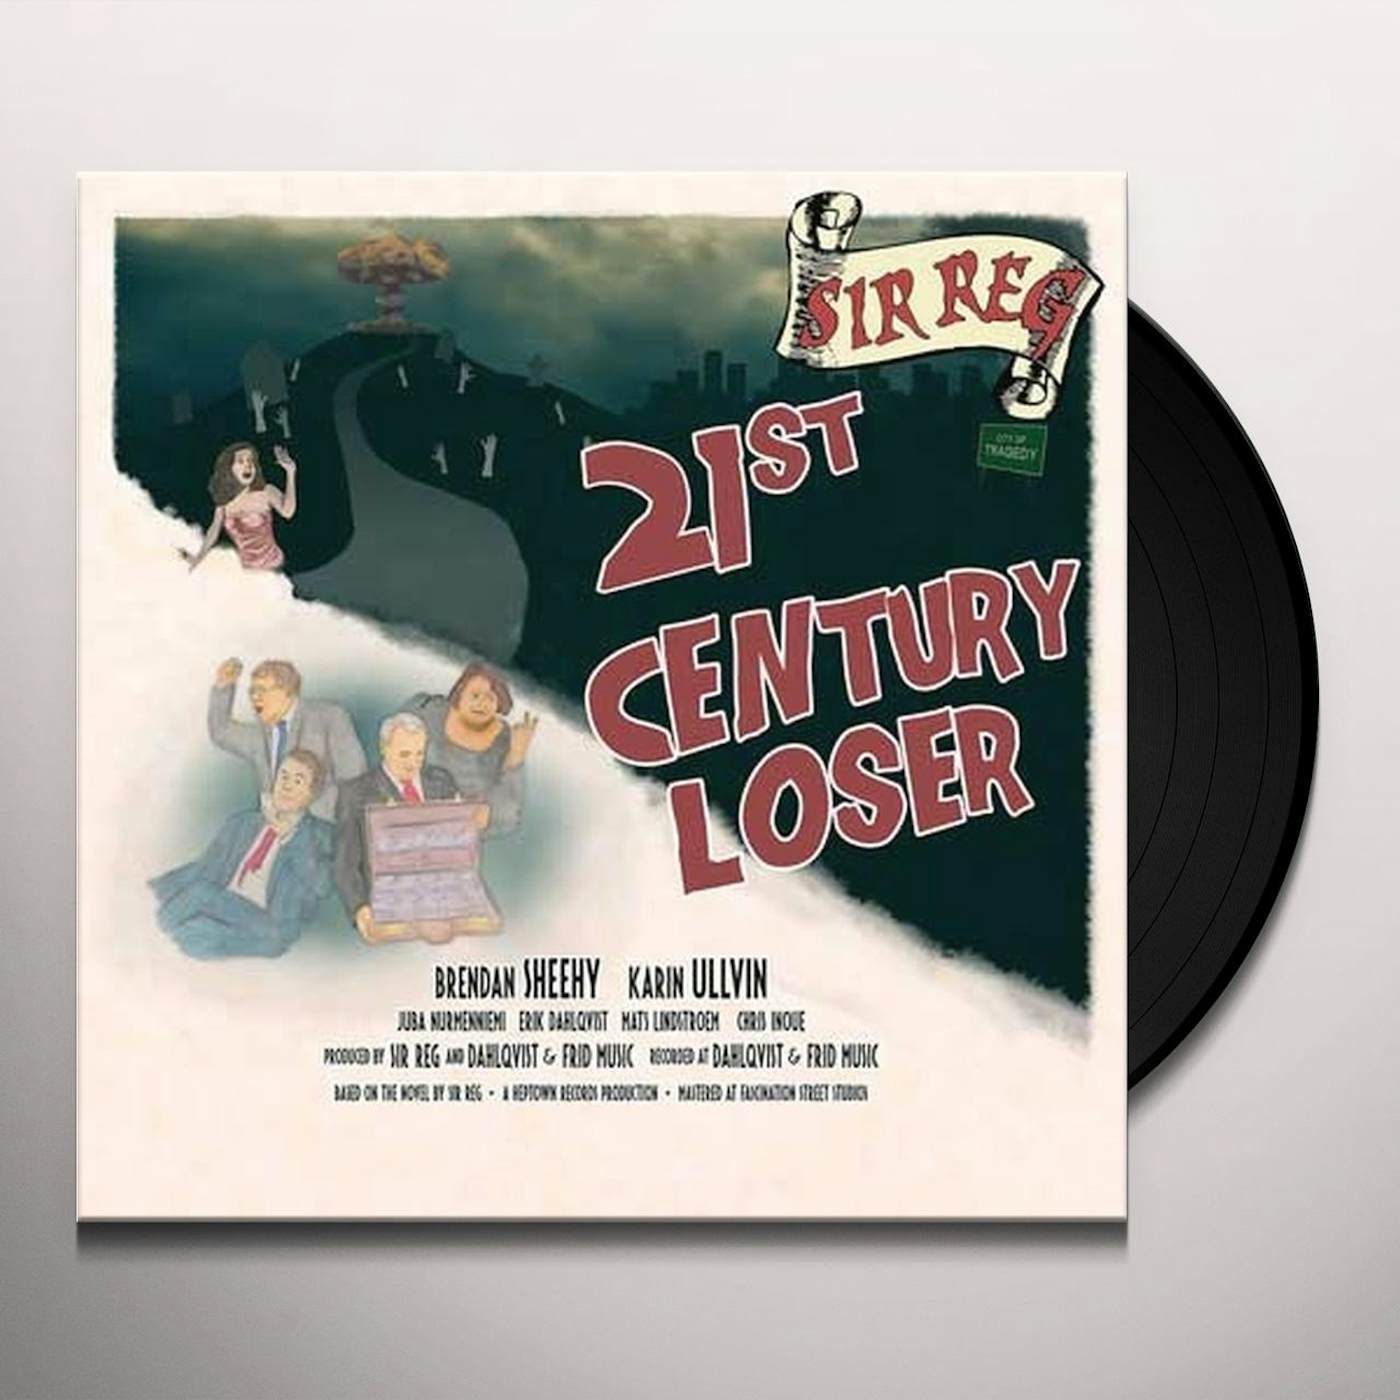 Sir Reg 21st Century Loser Vinyl Record